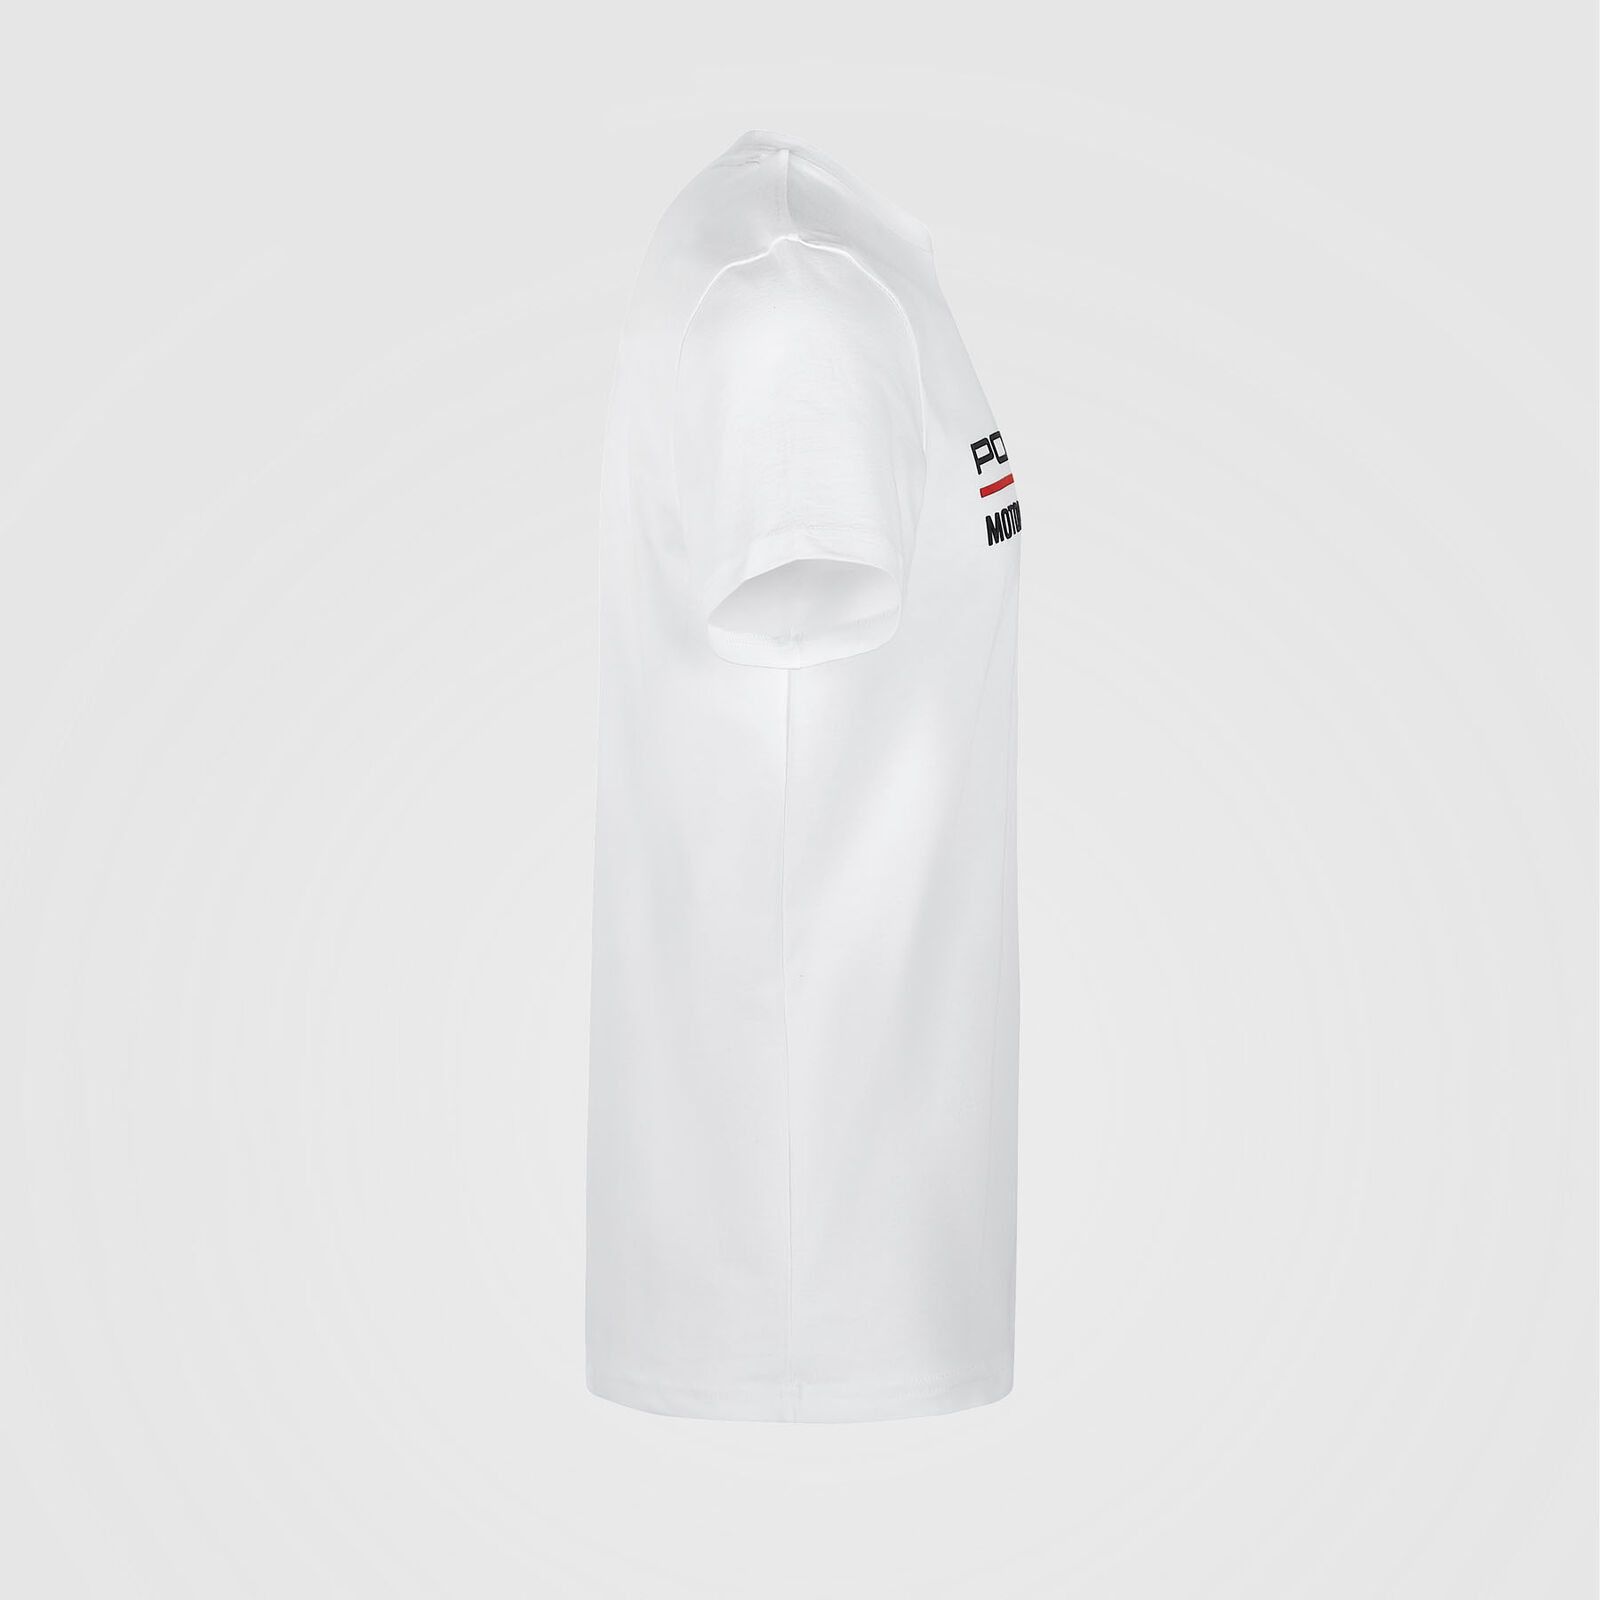 Porsche Motorsport Men's White T-Shirt